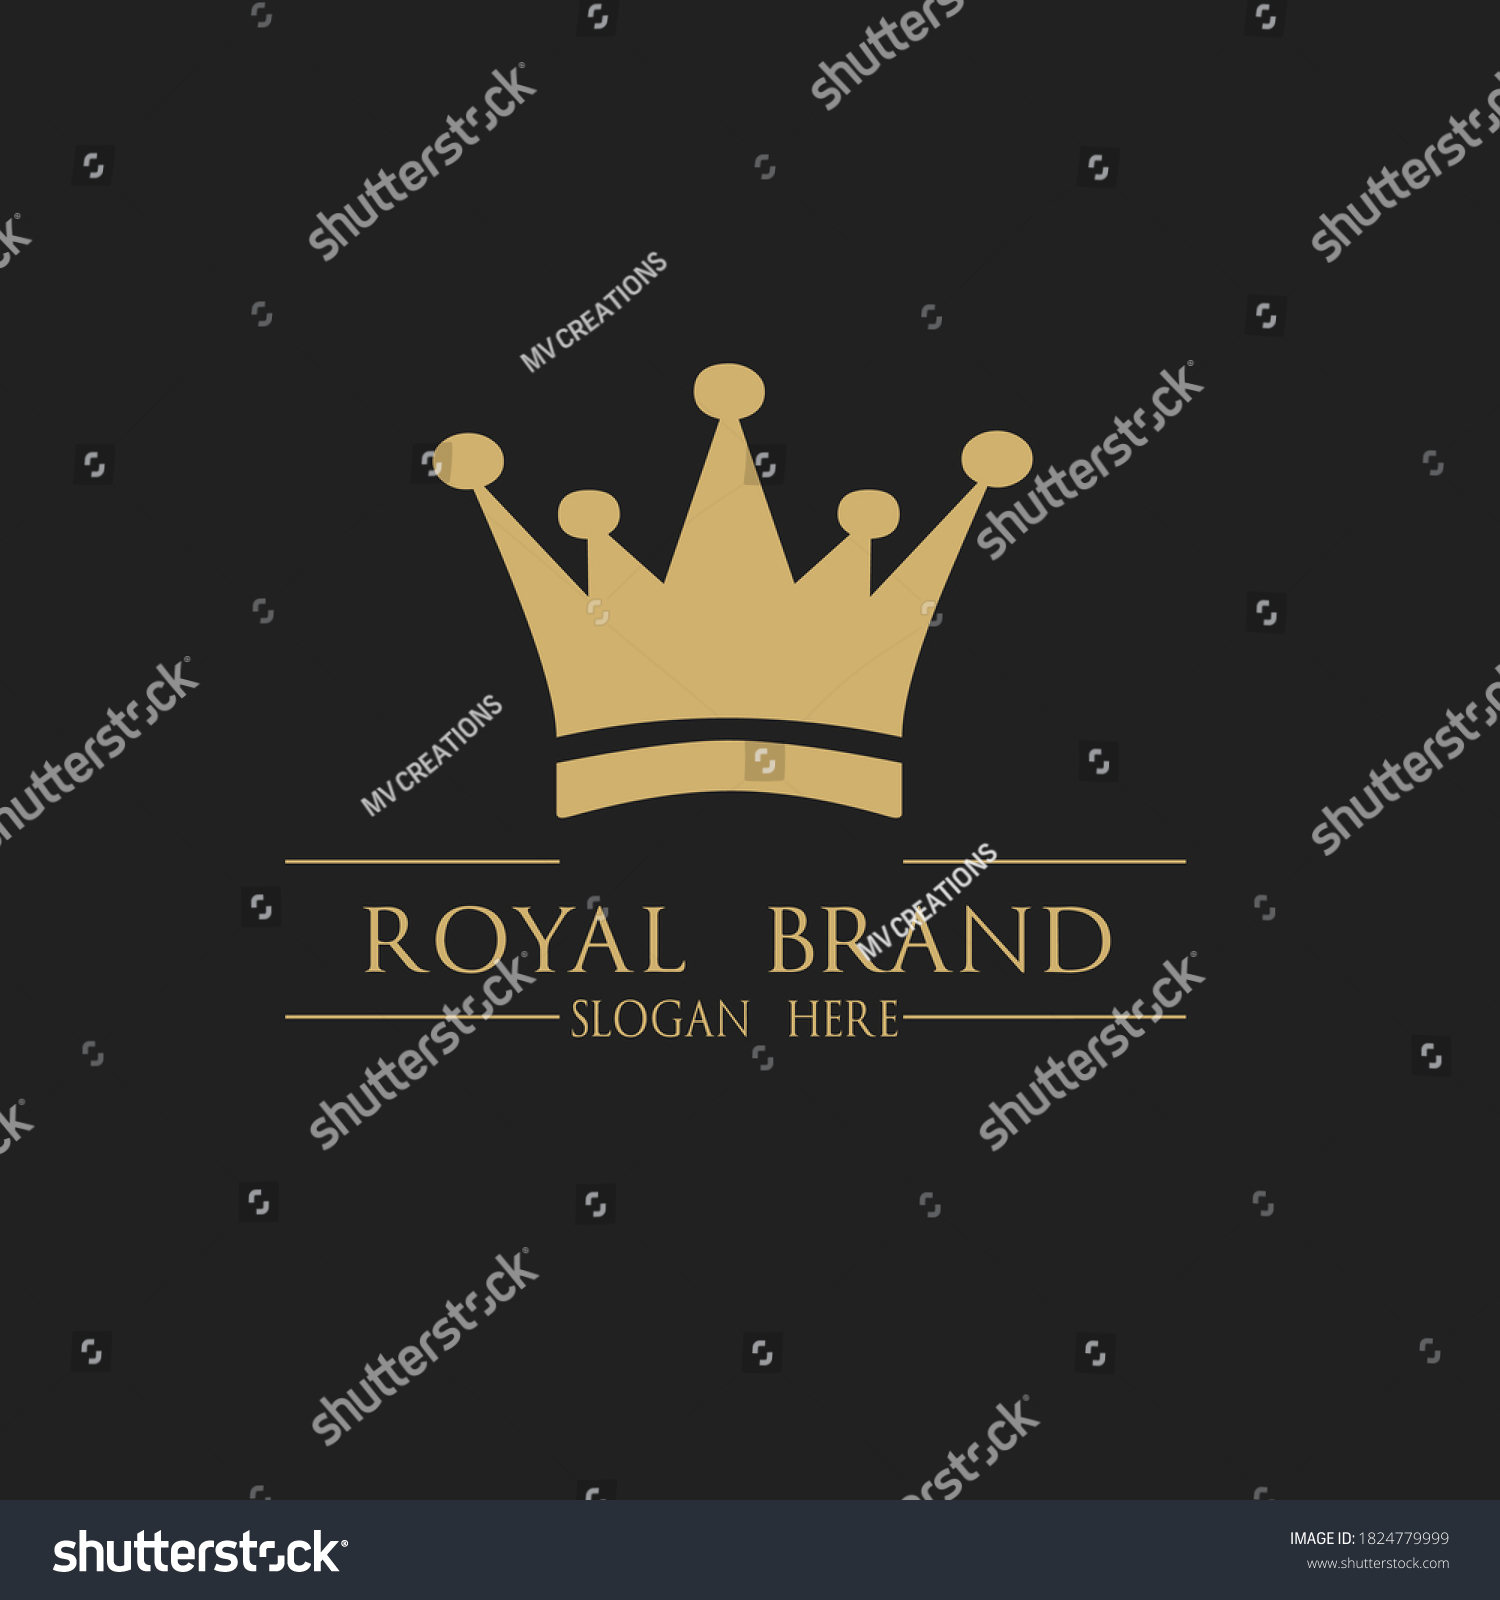 Royal Brand Illustration Vector Logo Design Stock Vector (Royalty Free ...